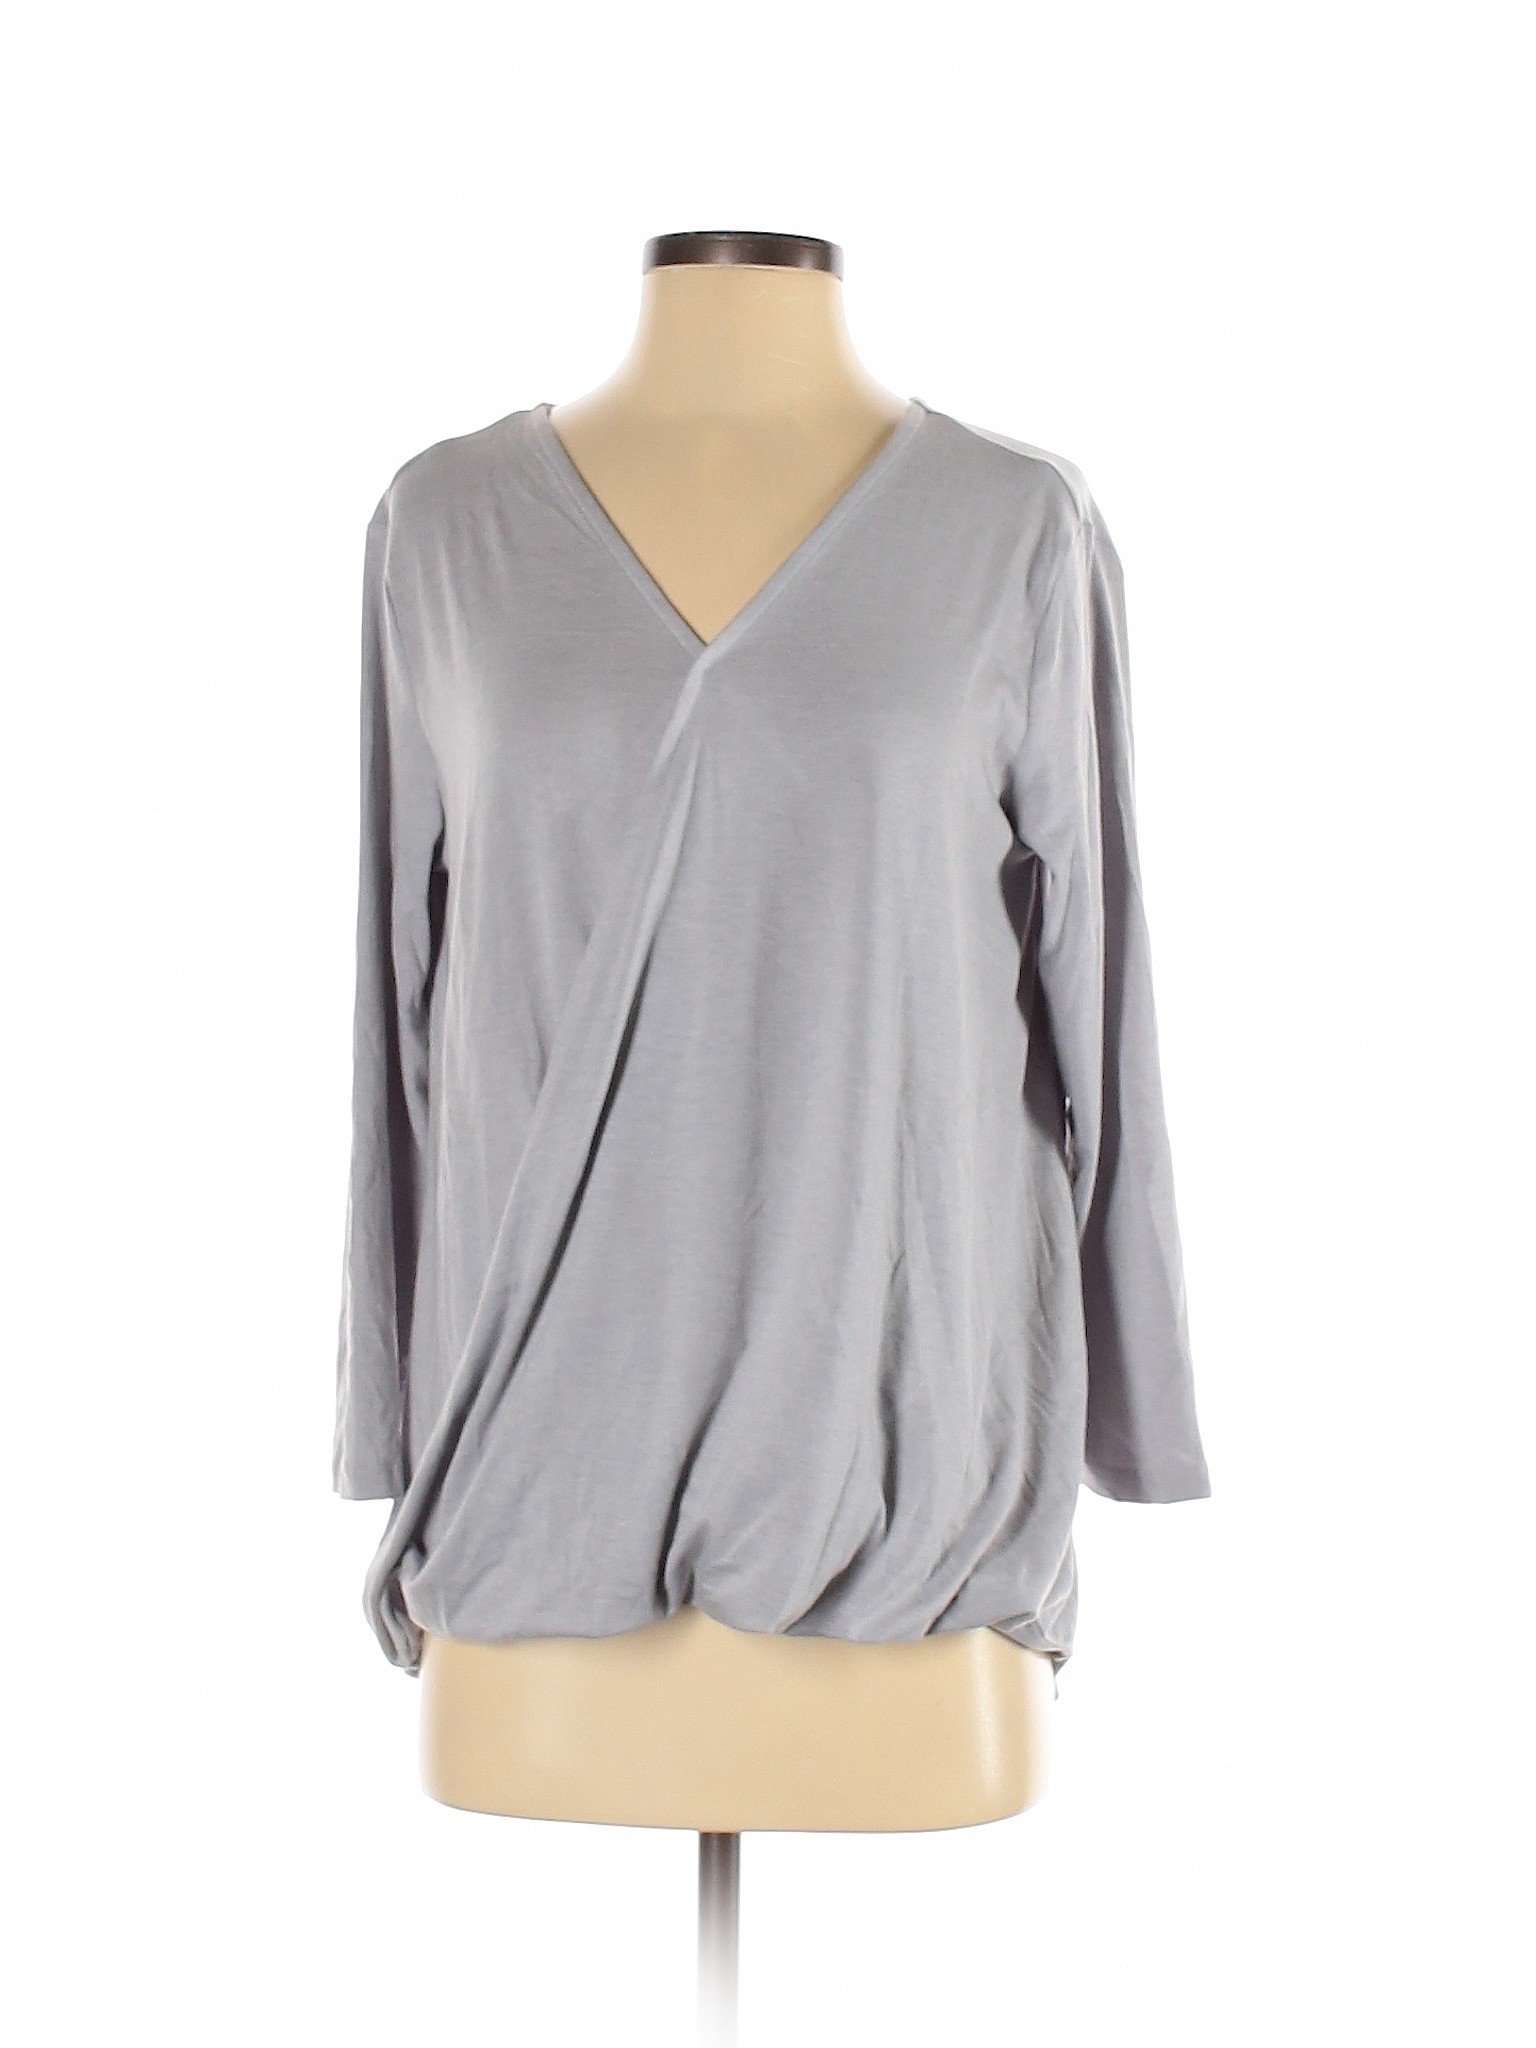 Unbranded Women Gray 3/4 Sleeve Top S | eBay